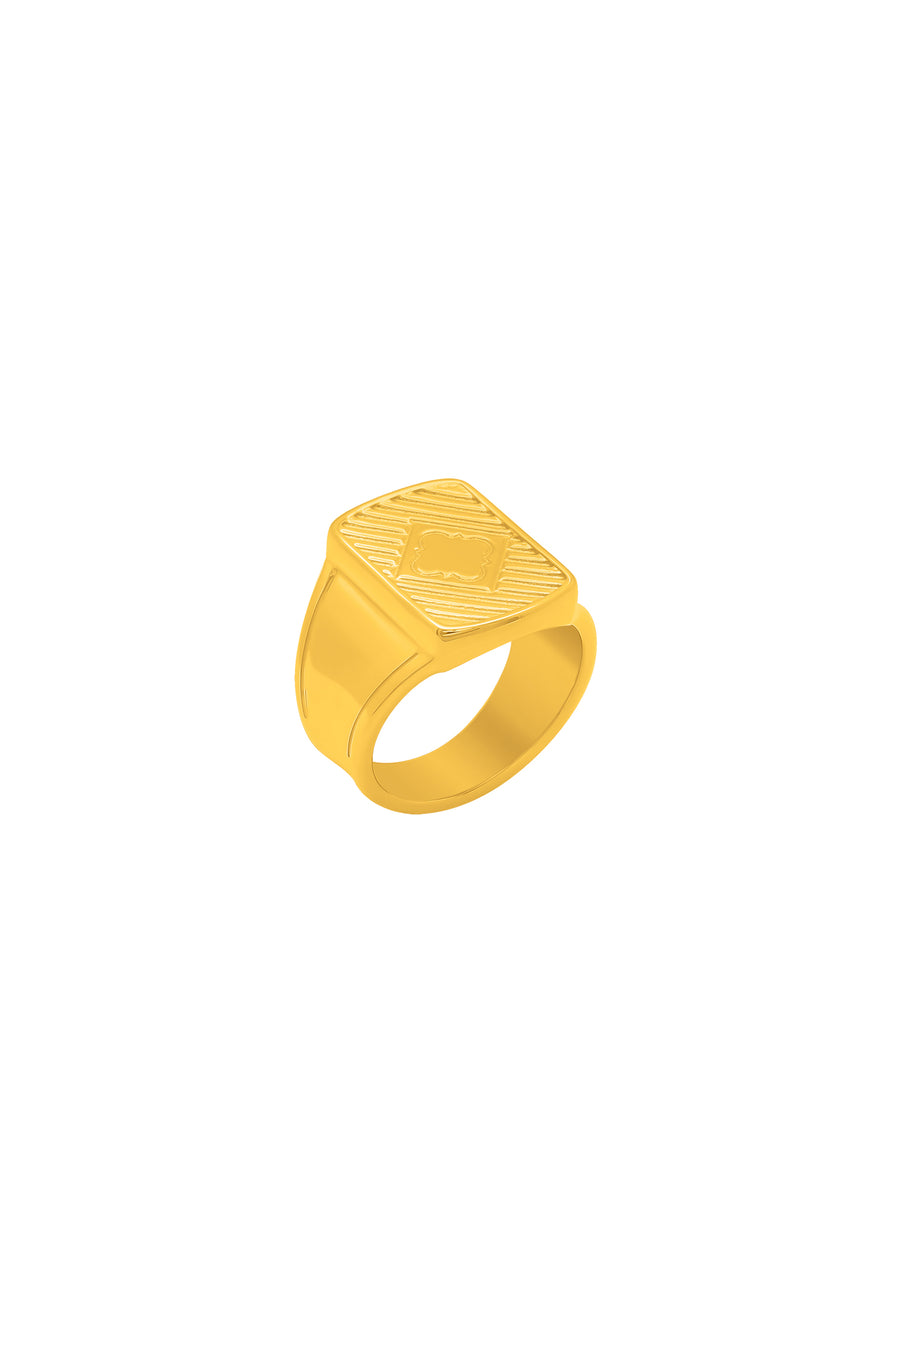 Square Ribbed Men's Gold Signet Ring